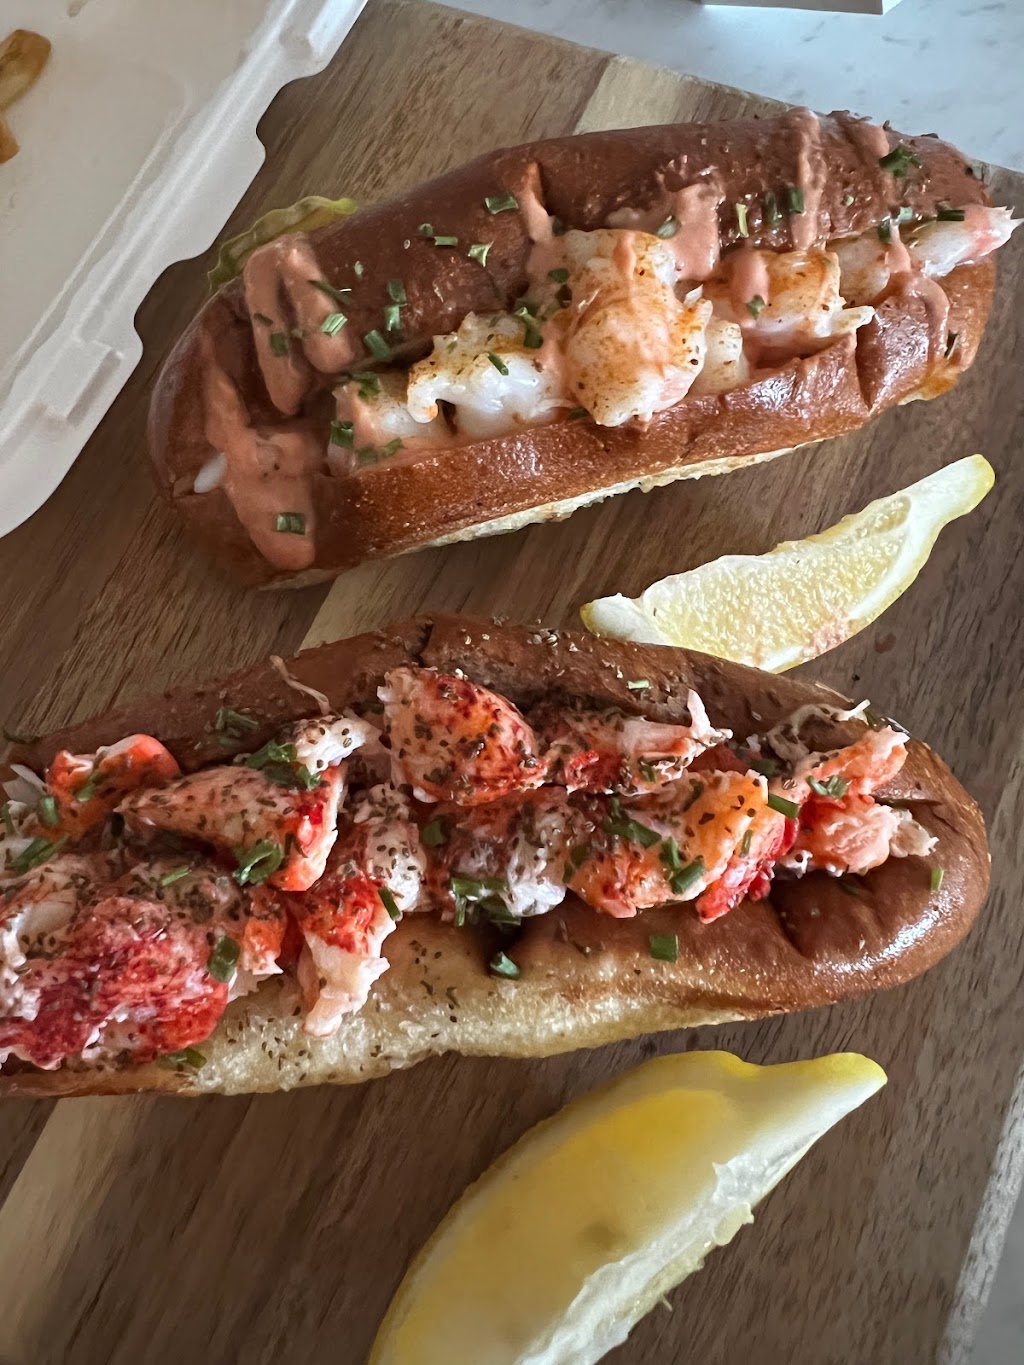 Quincys Original Lobster Rolls | 806 N Bay Ave, Beach Haven, NJ 08008 | Phone: (609) 991-2151